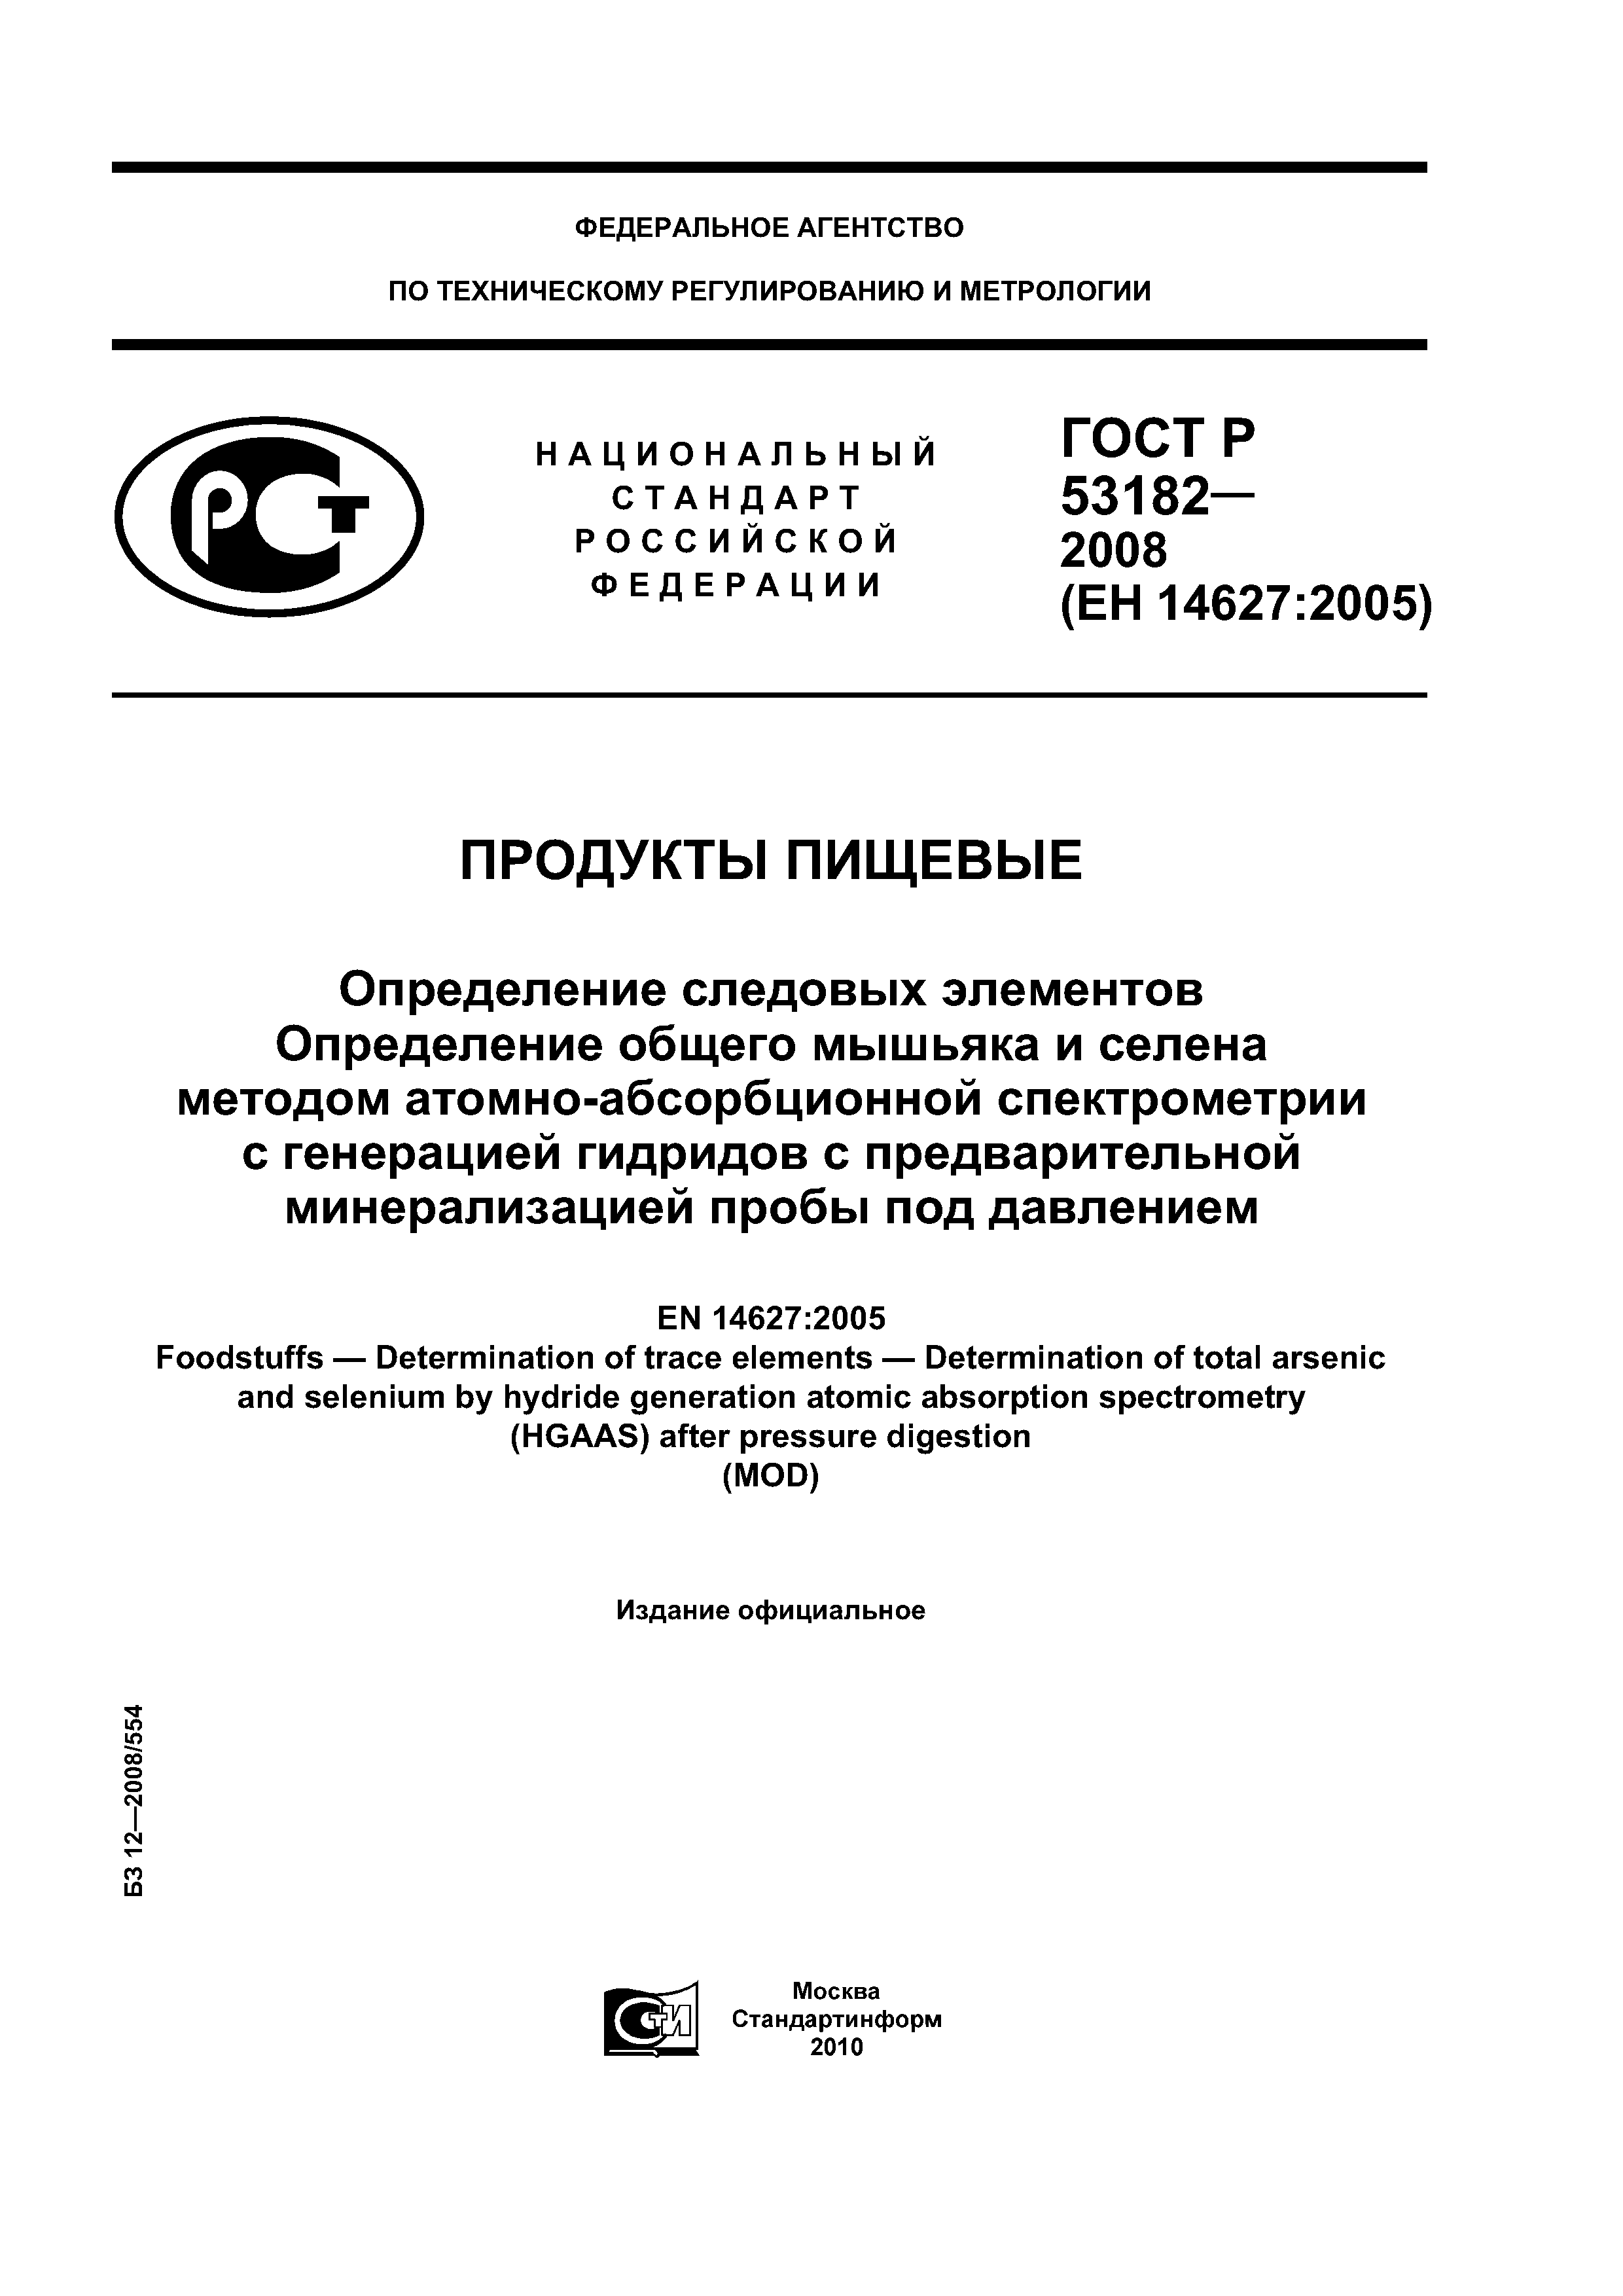 ГОСТ Р 53182-2008